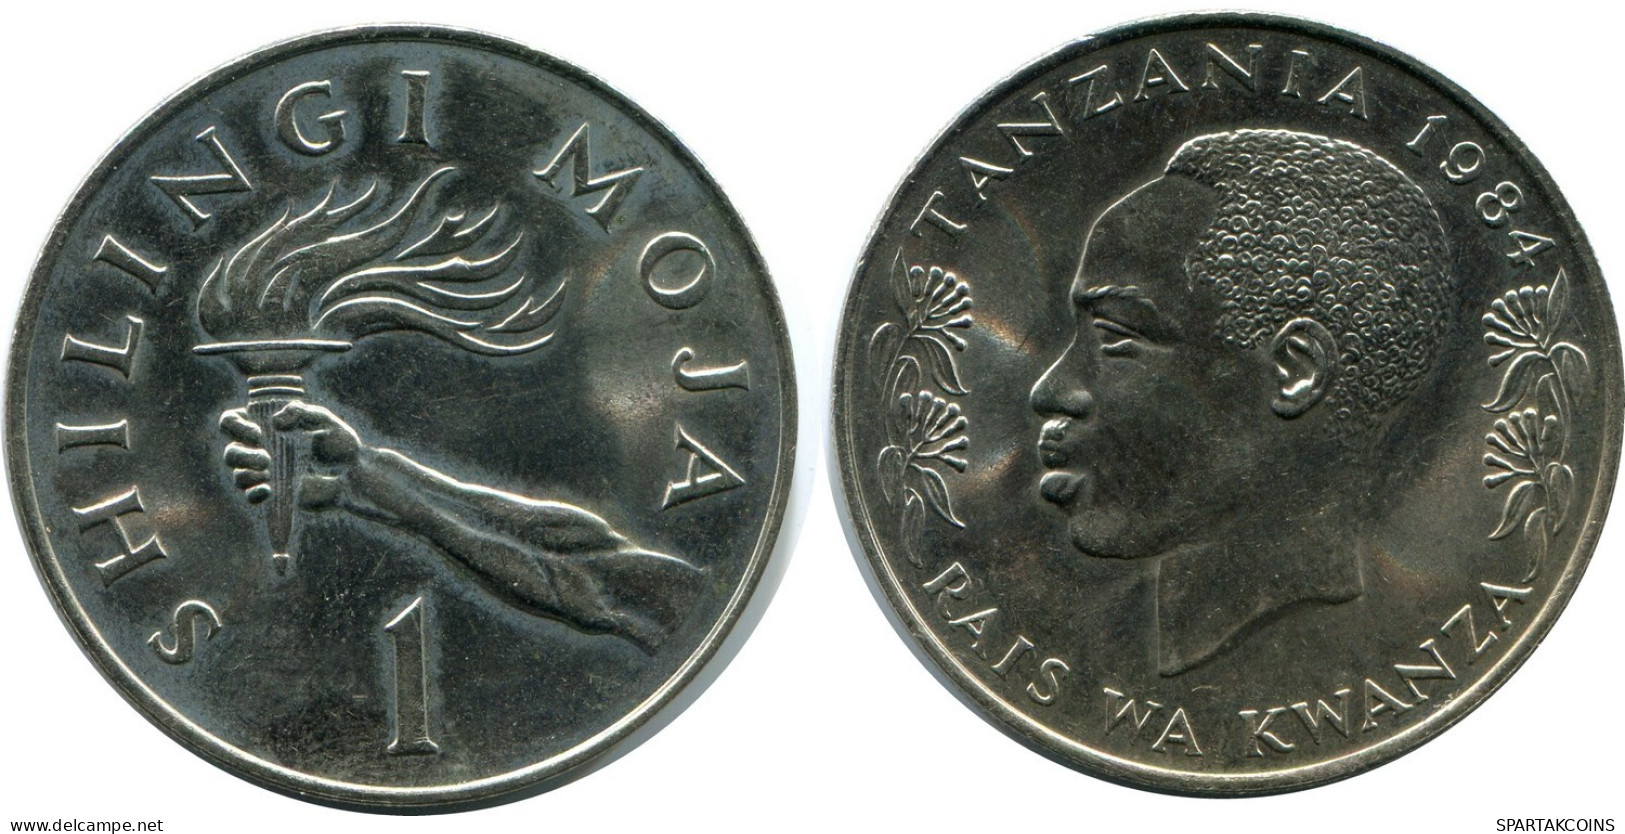 1 SHILINGI 1984 TANZANIA Coin #AZ088.U.A - Tanzanie